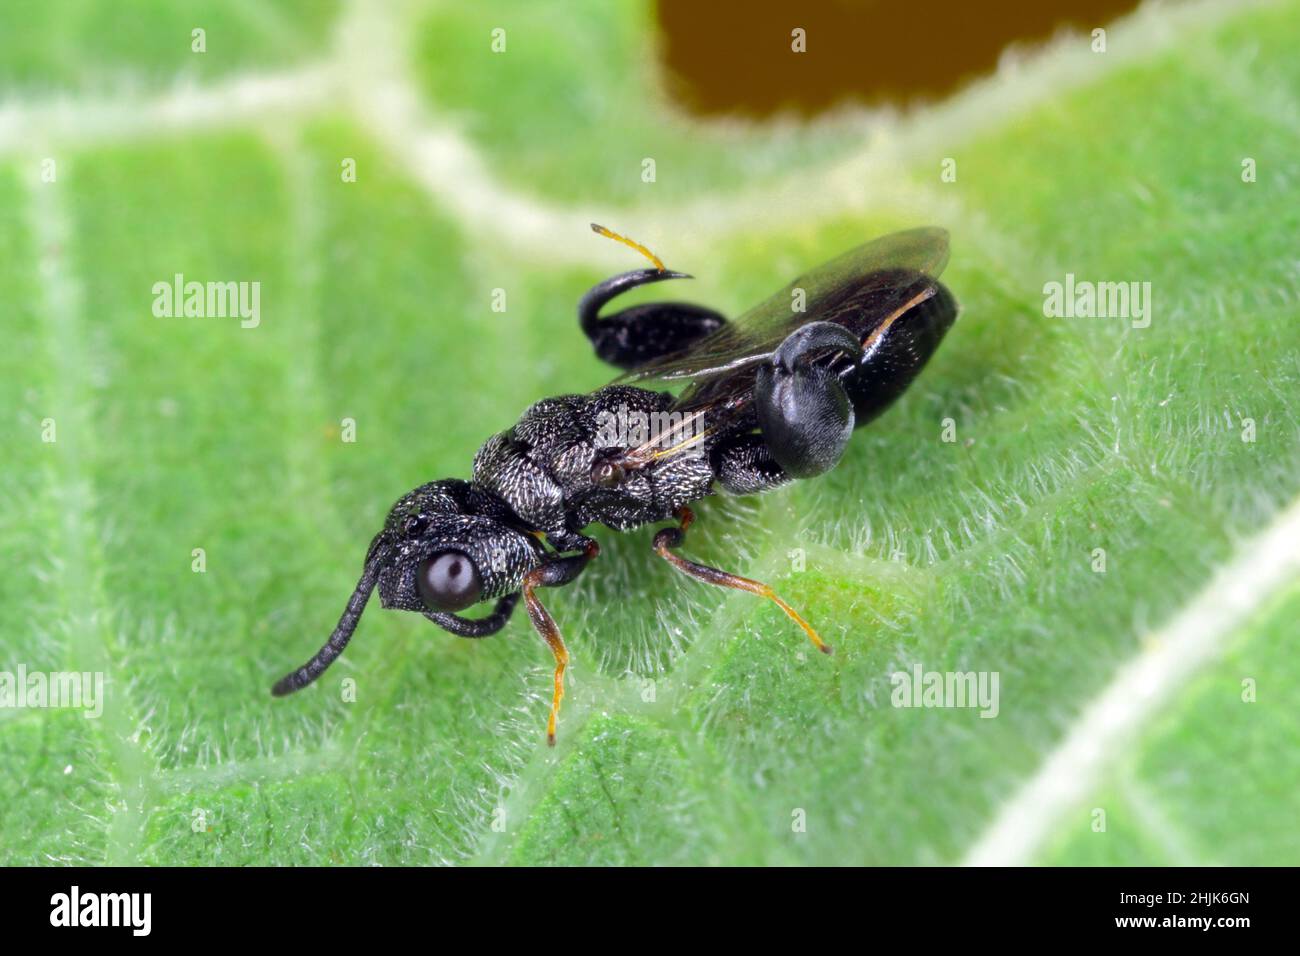 Parasitic wasp (Chalcidoidea) on a green leaf. Stock Photo